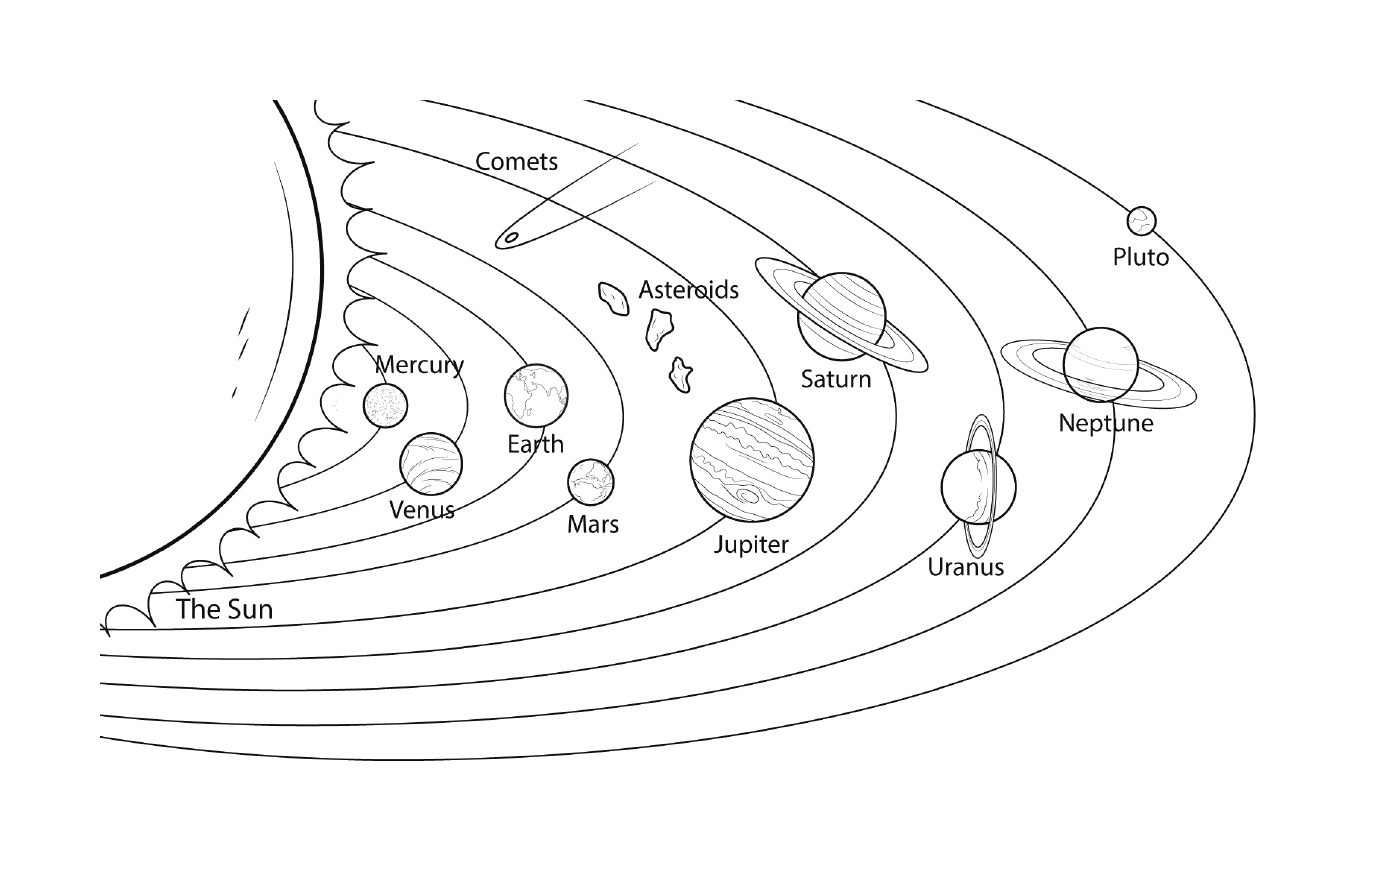  Sistema solar em modelo 